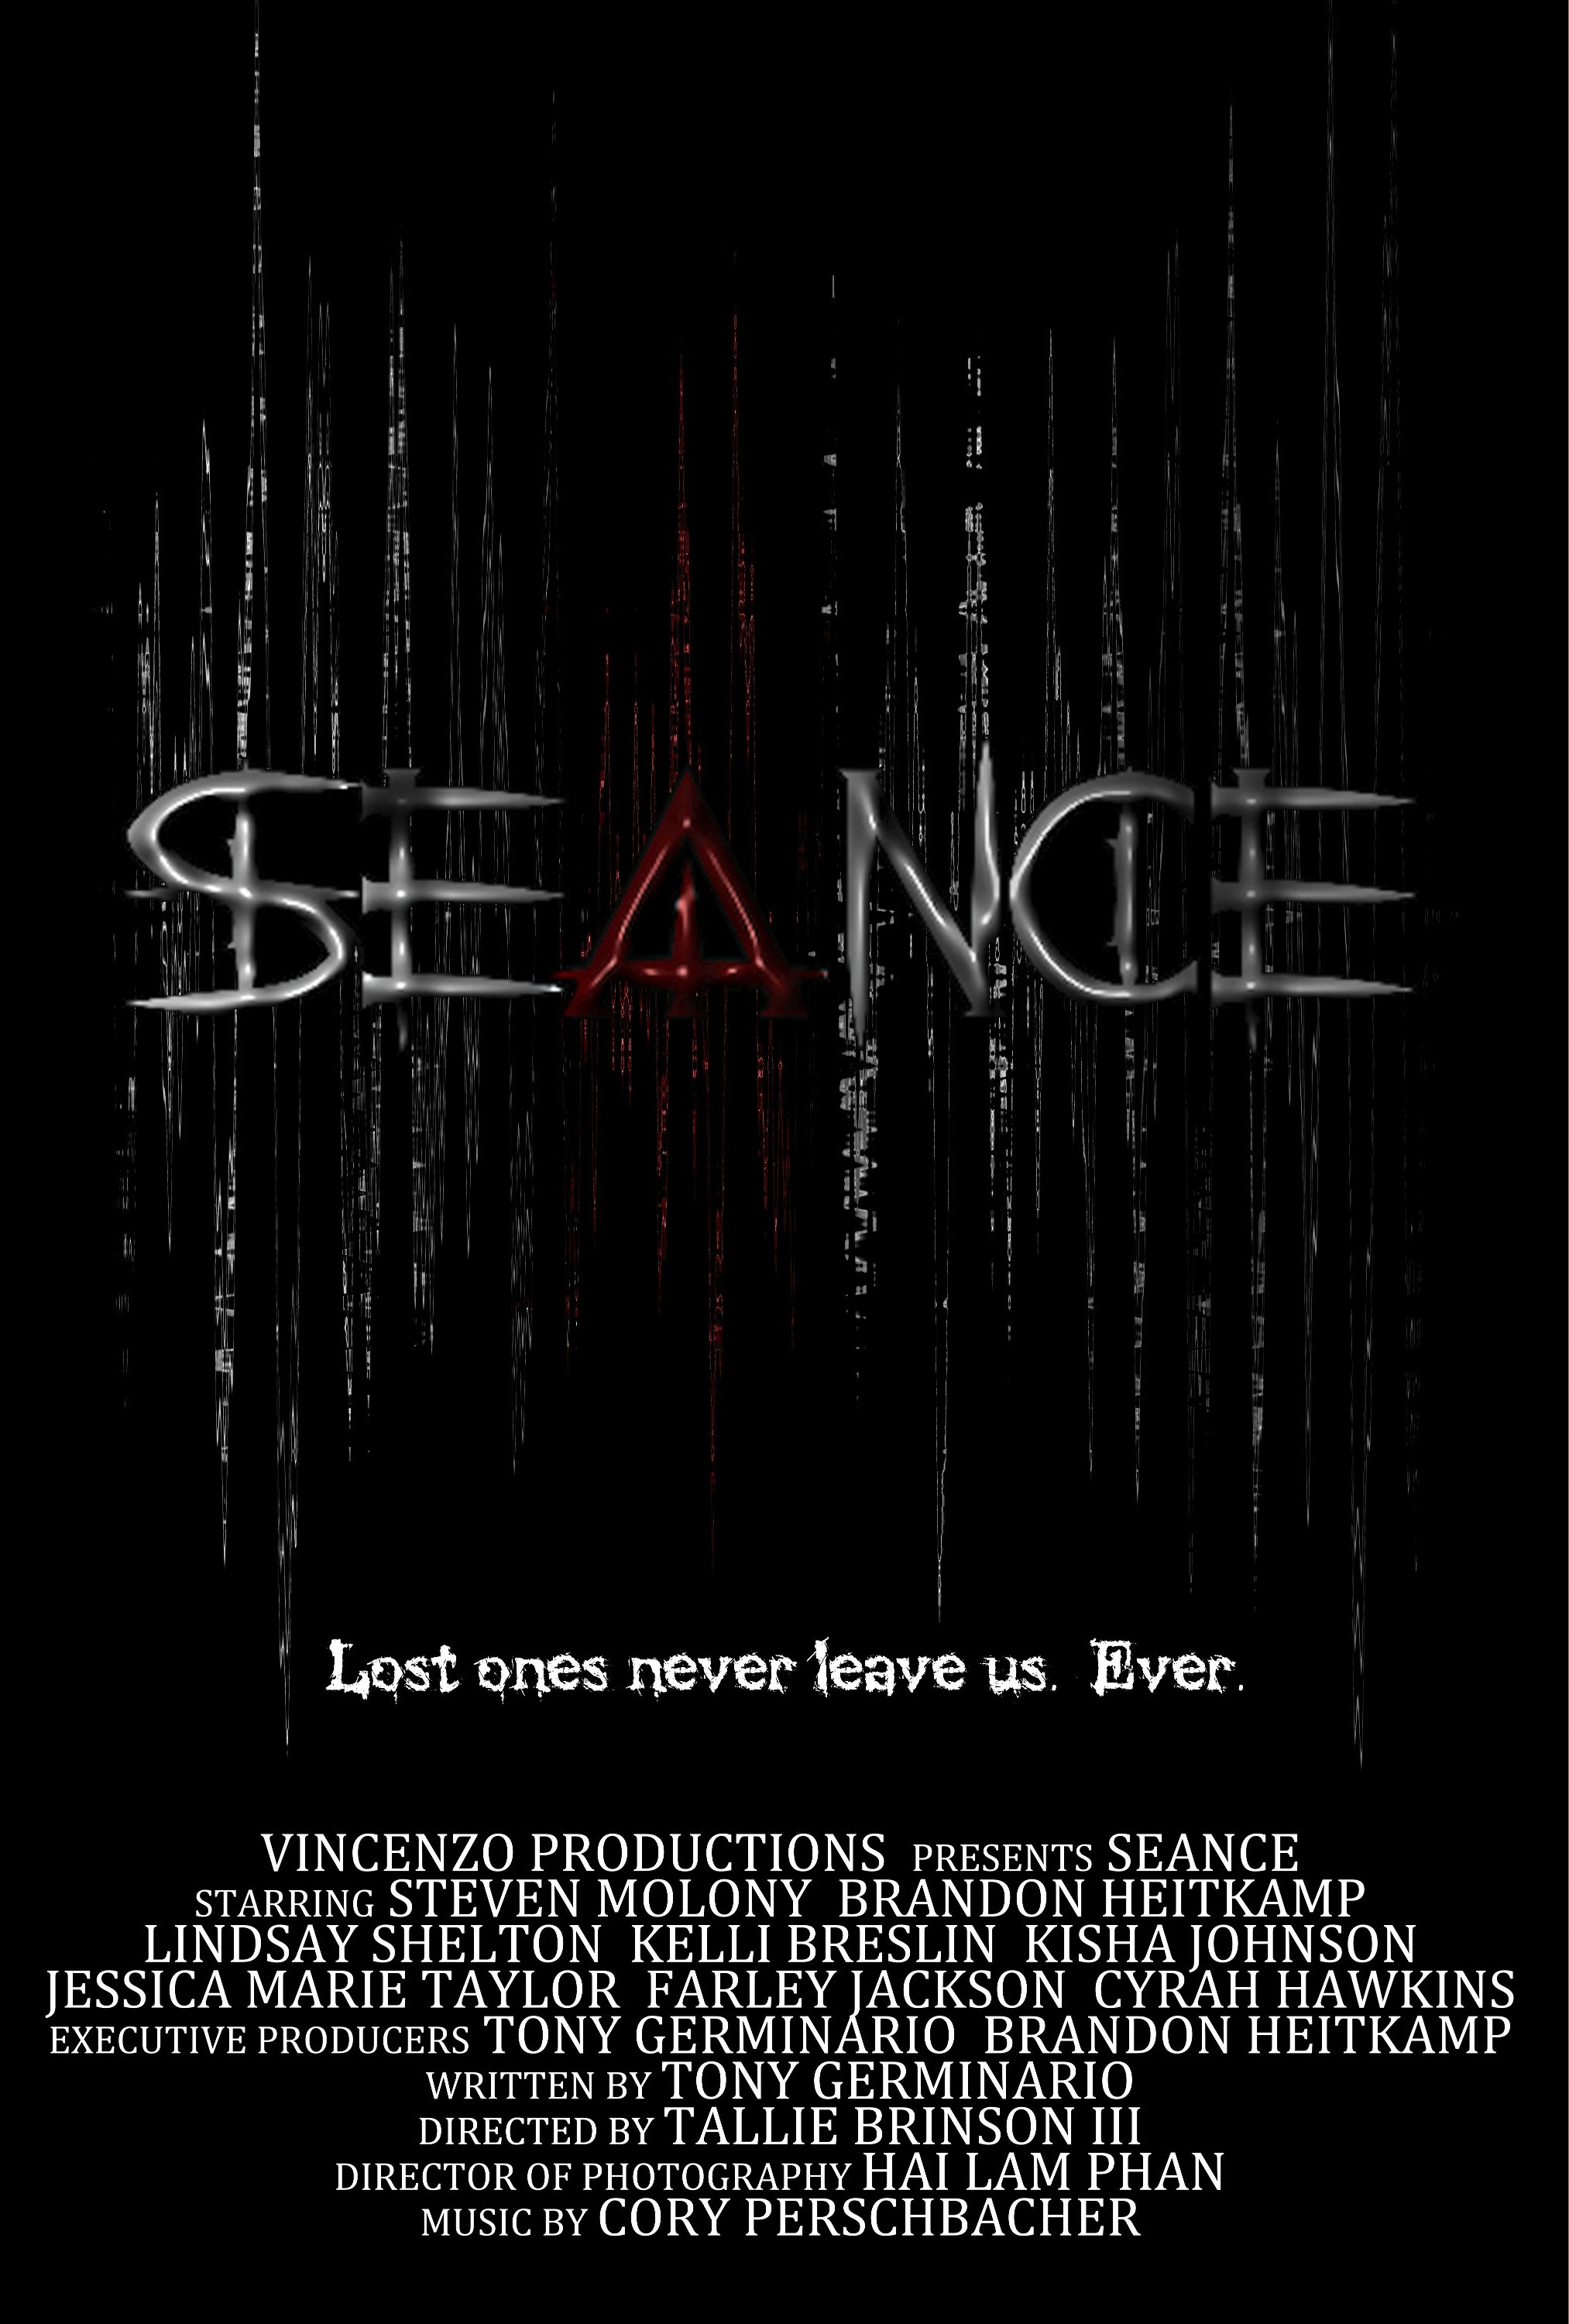 Mega Sized Movie Poster Image for Seance